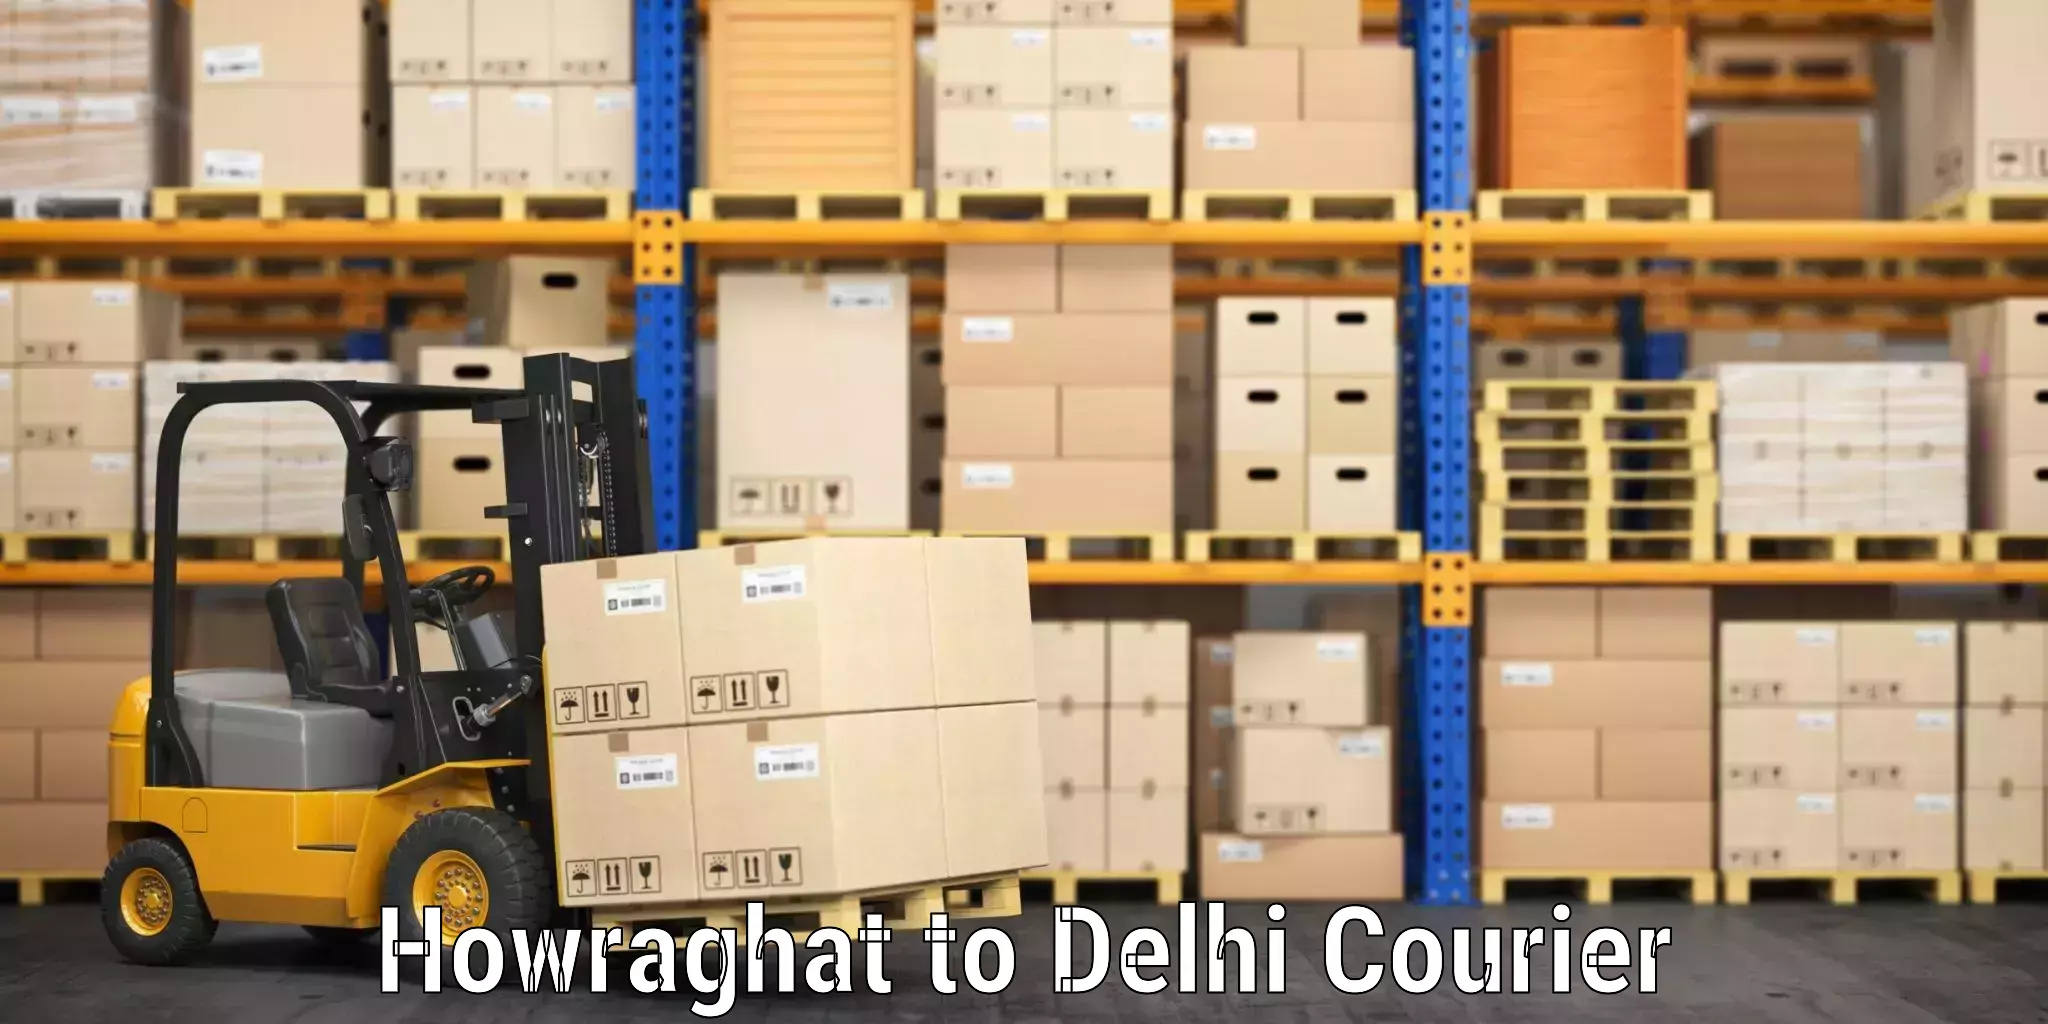 Urgent luggage shipment Howraghat to Subhash Nagar